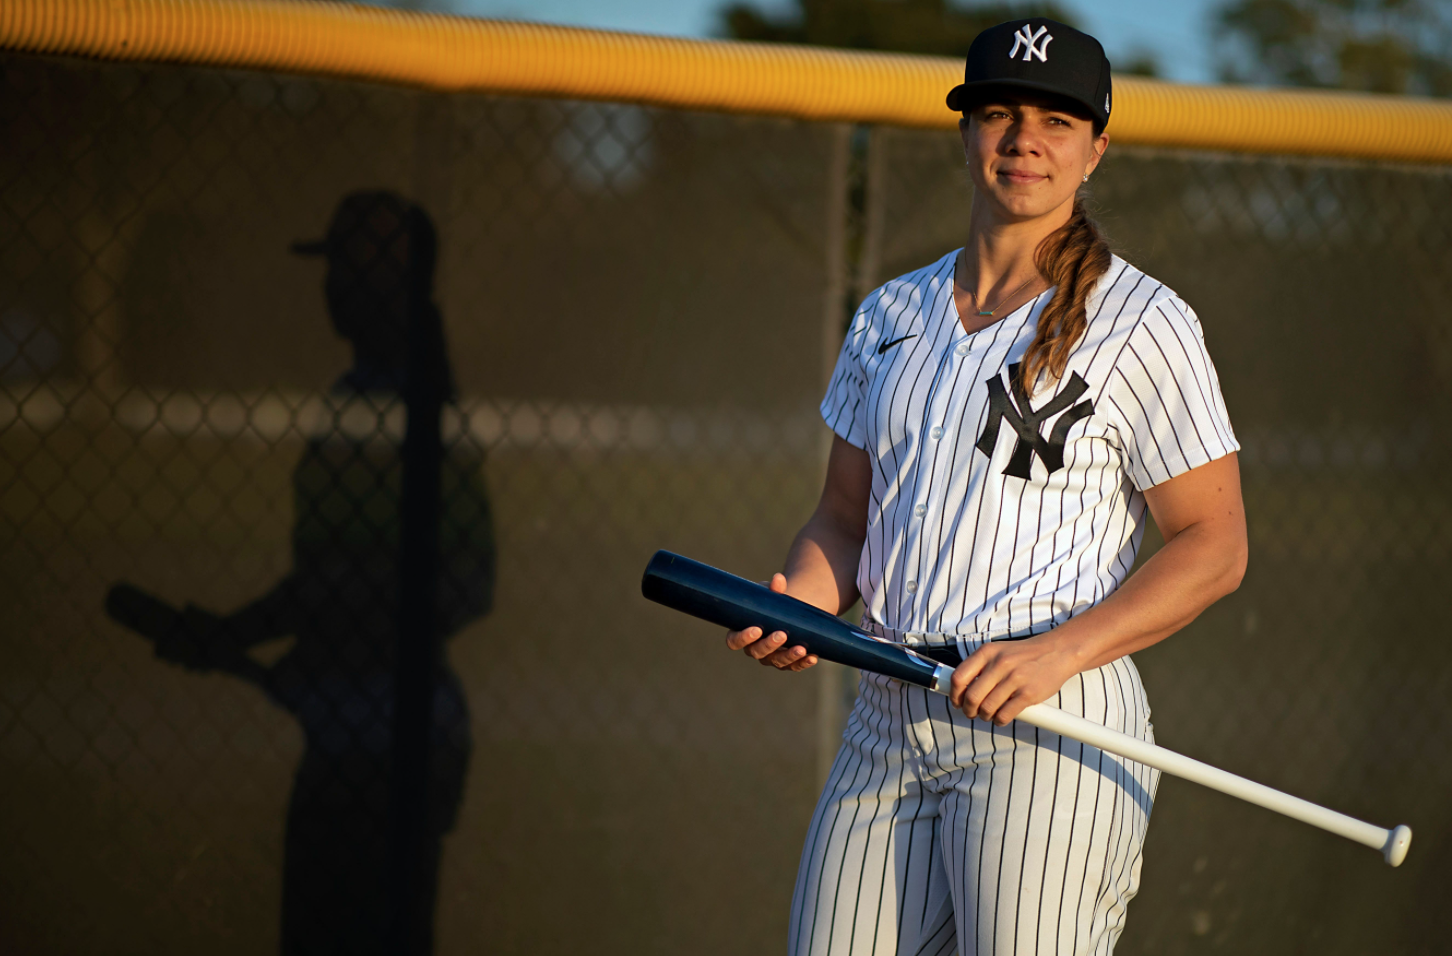 Yankees' Rachel Balkovec makes managerial debut with Tampa Tarpons